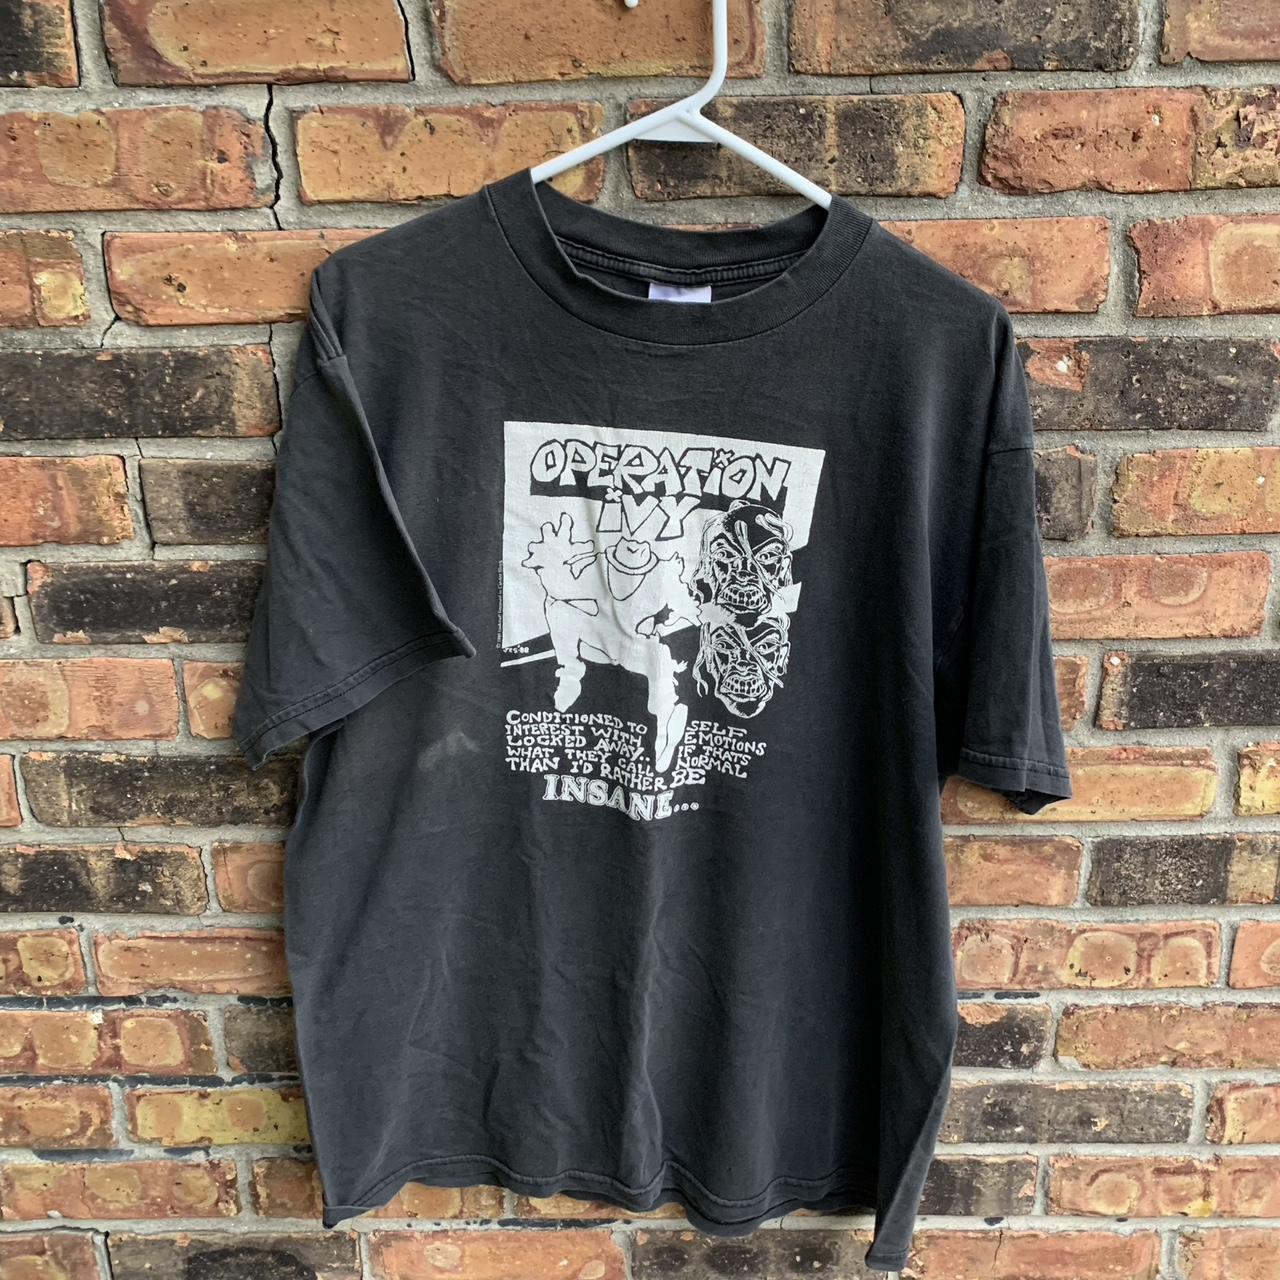 Vintage Rare 89’ Operation Ivy Shirt This shirt is... - Depop